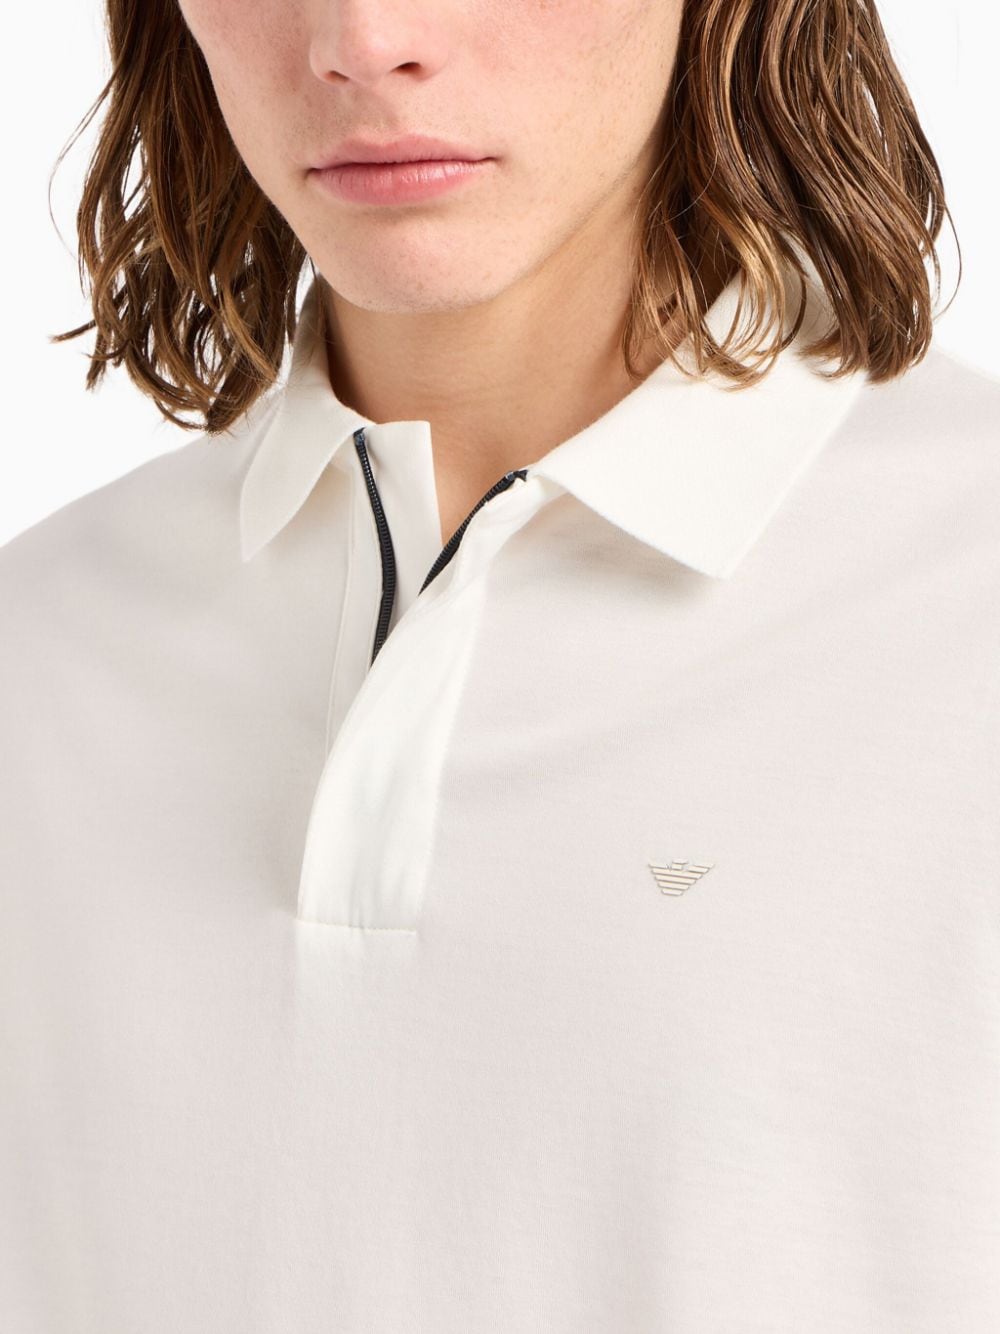 Emporio Armani Capsule T Shirts And Polos White